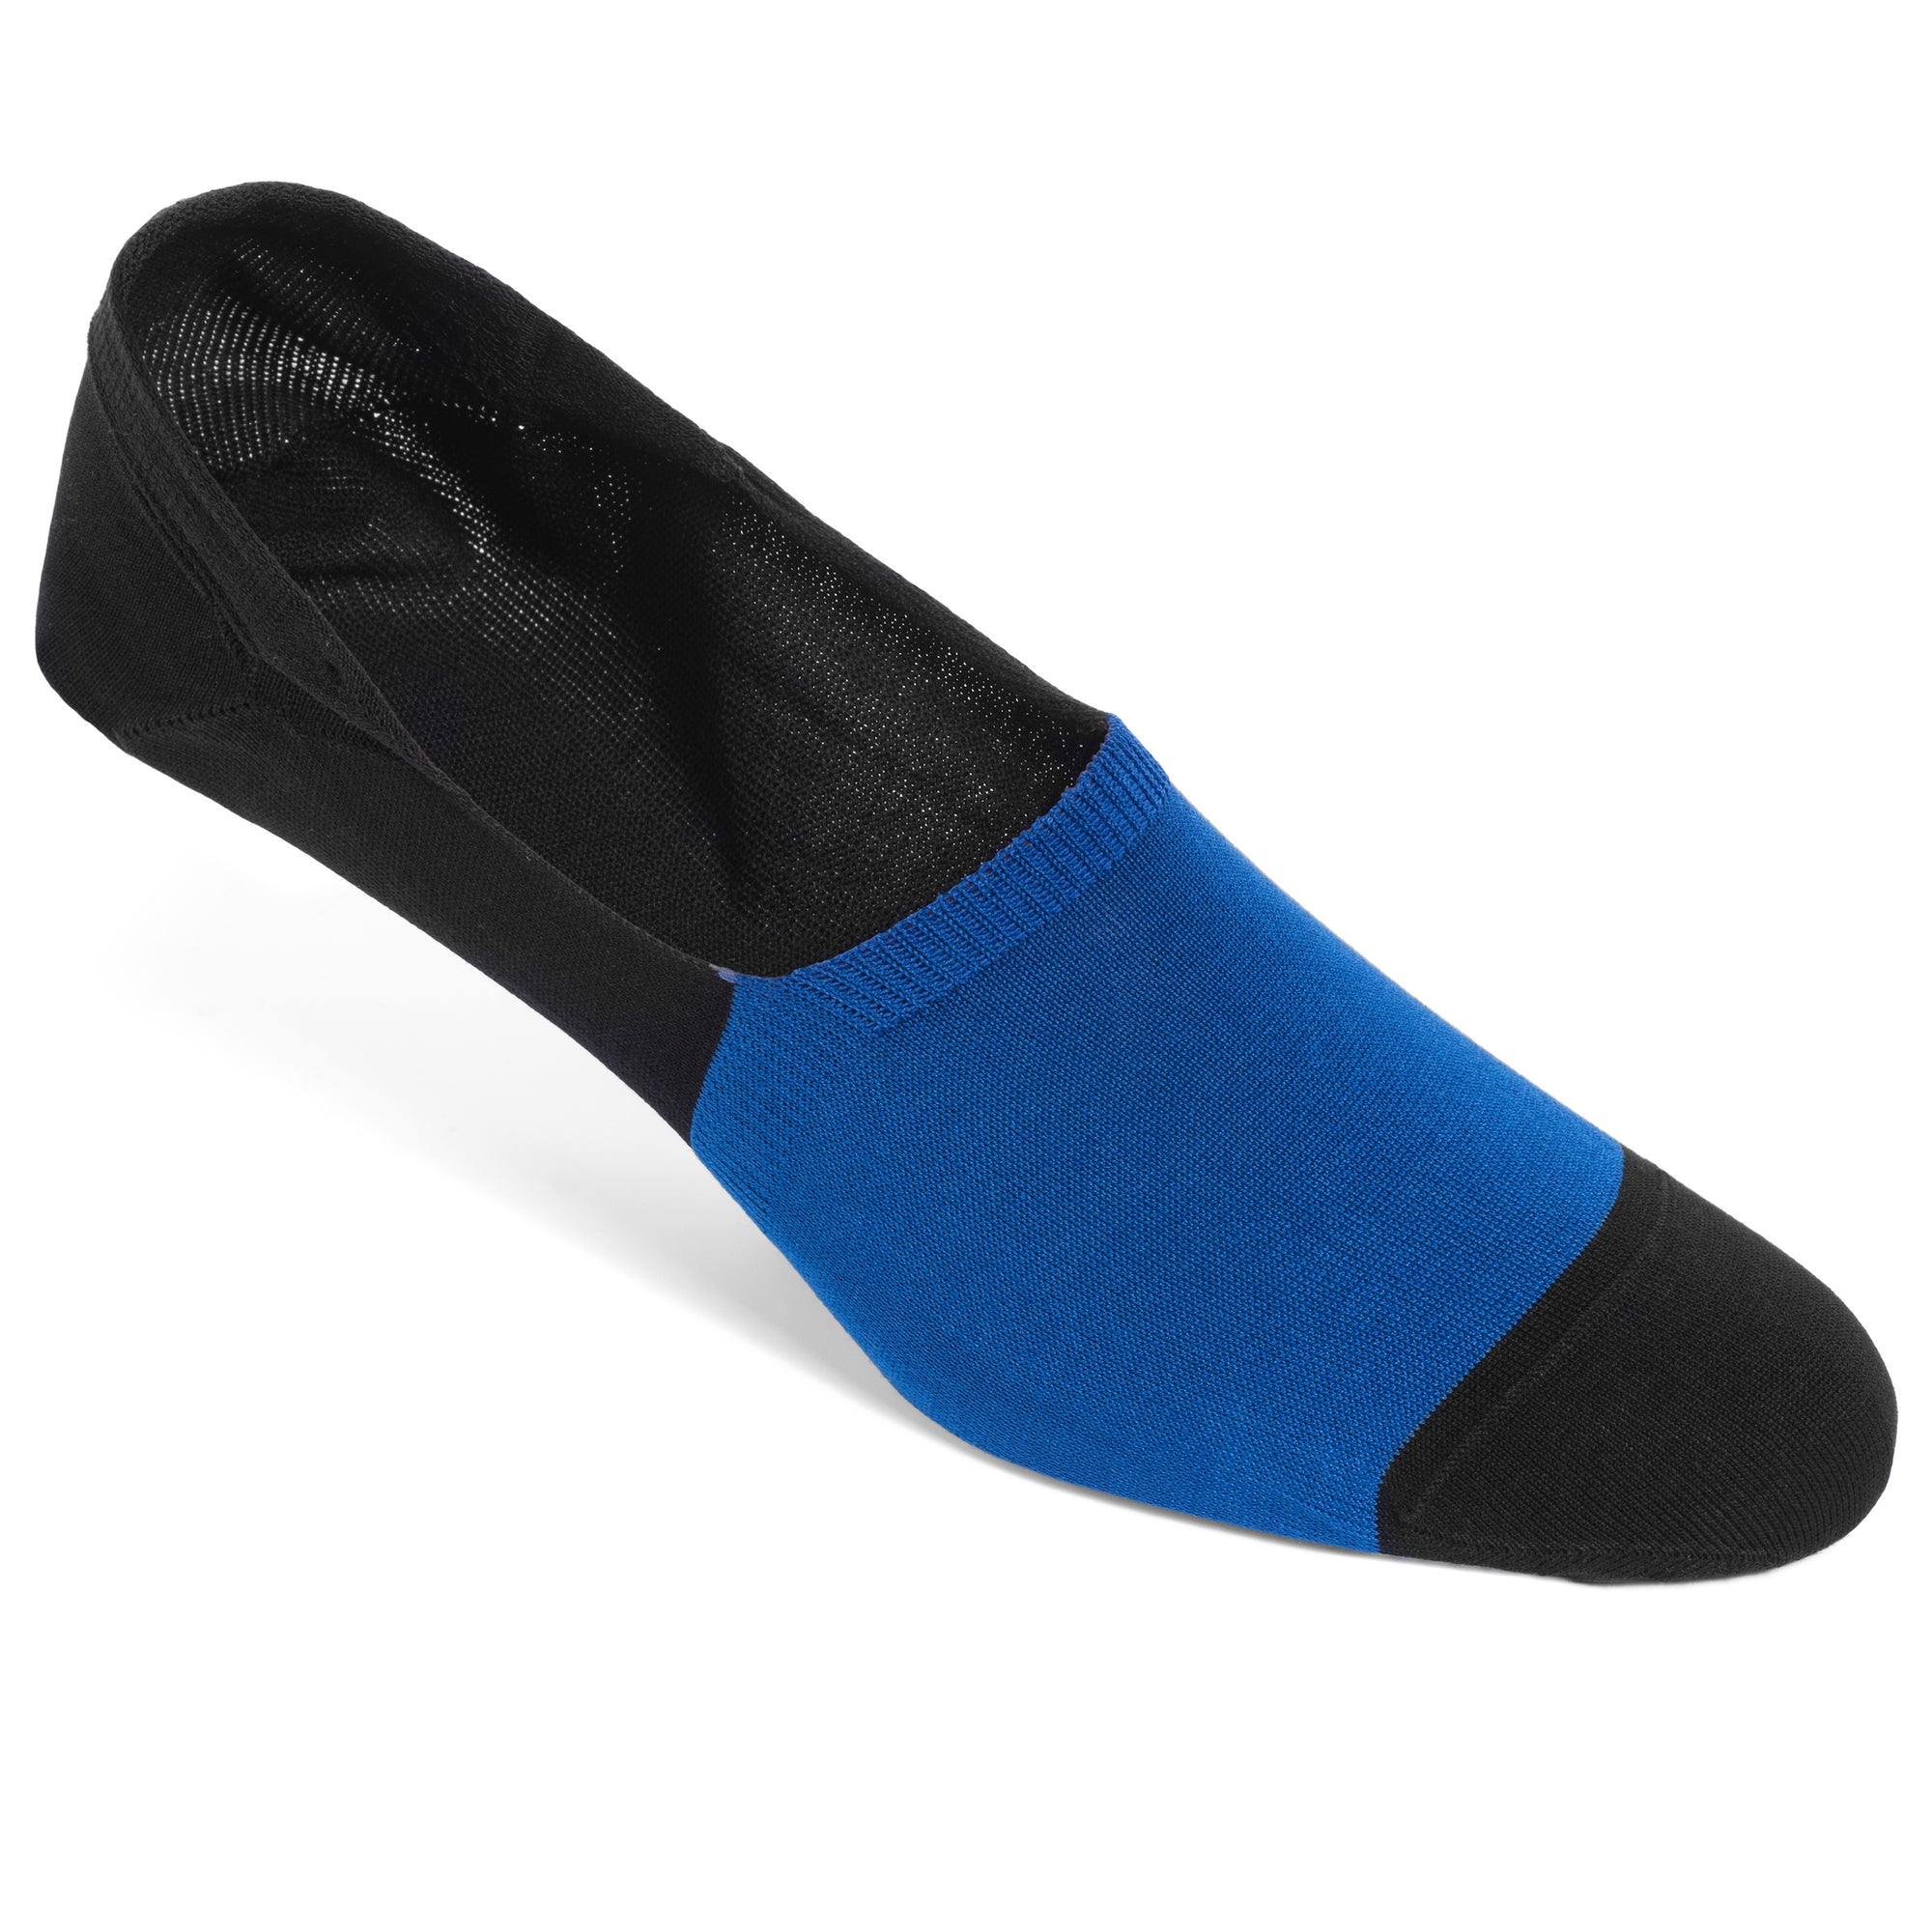 Black/Blue No-Show socks - To Boot New York